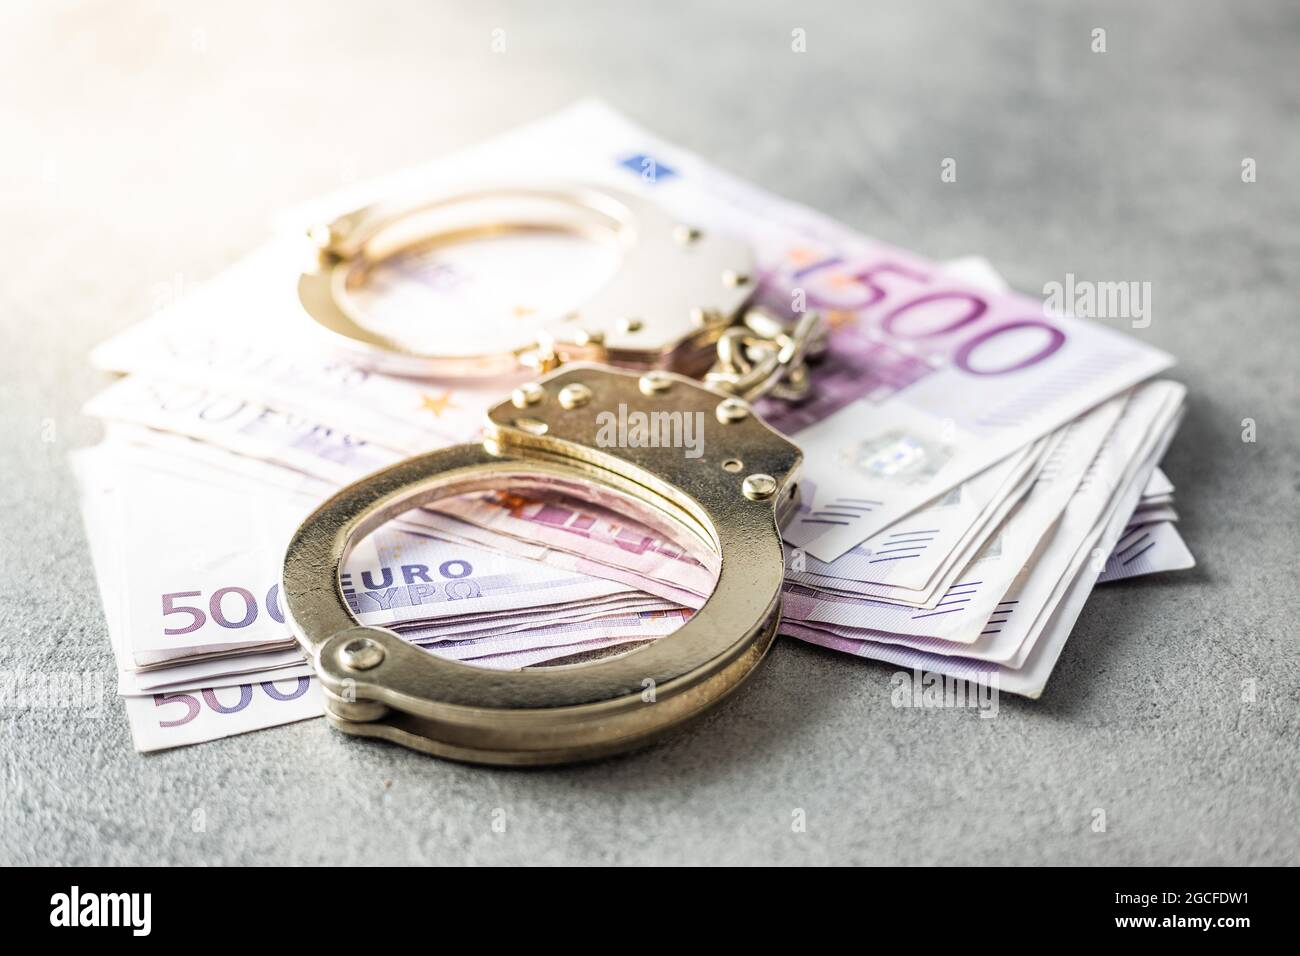 Euro banknotes and handcuffs. Stock Photo